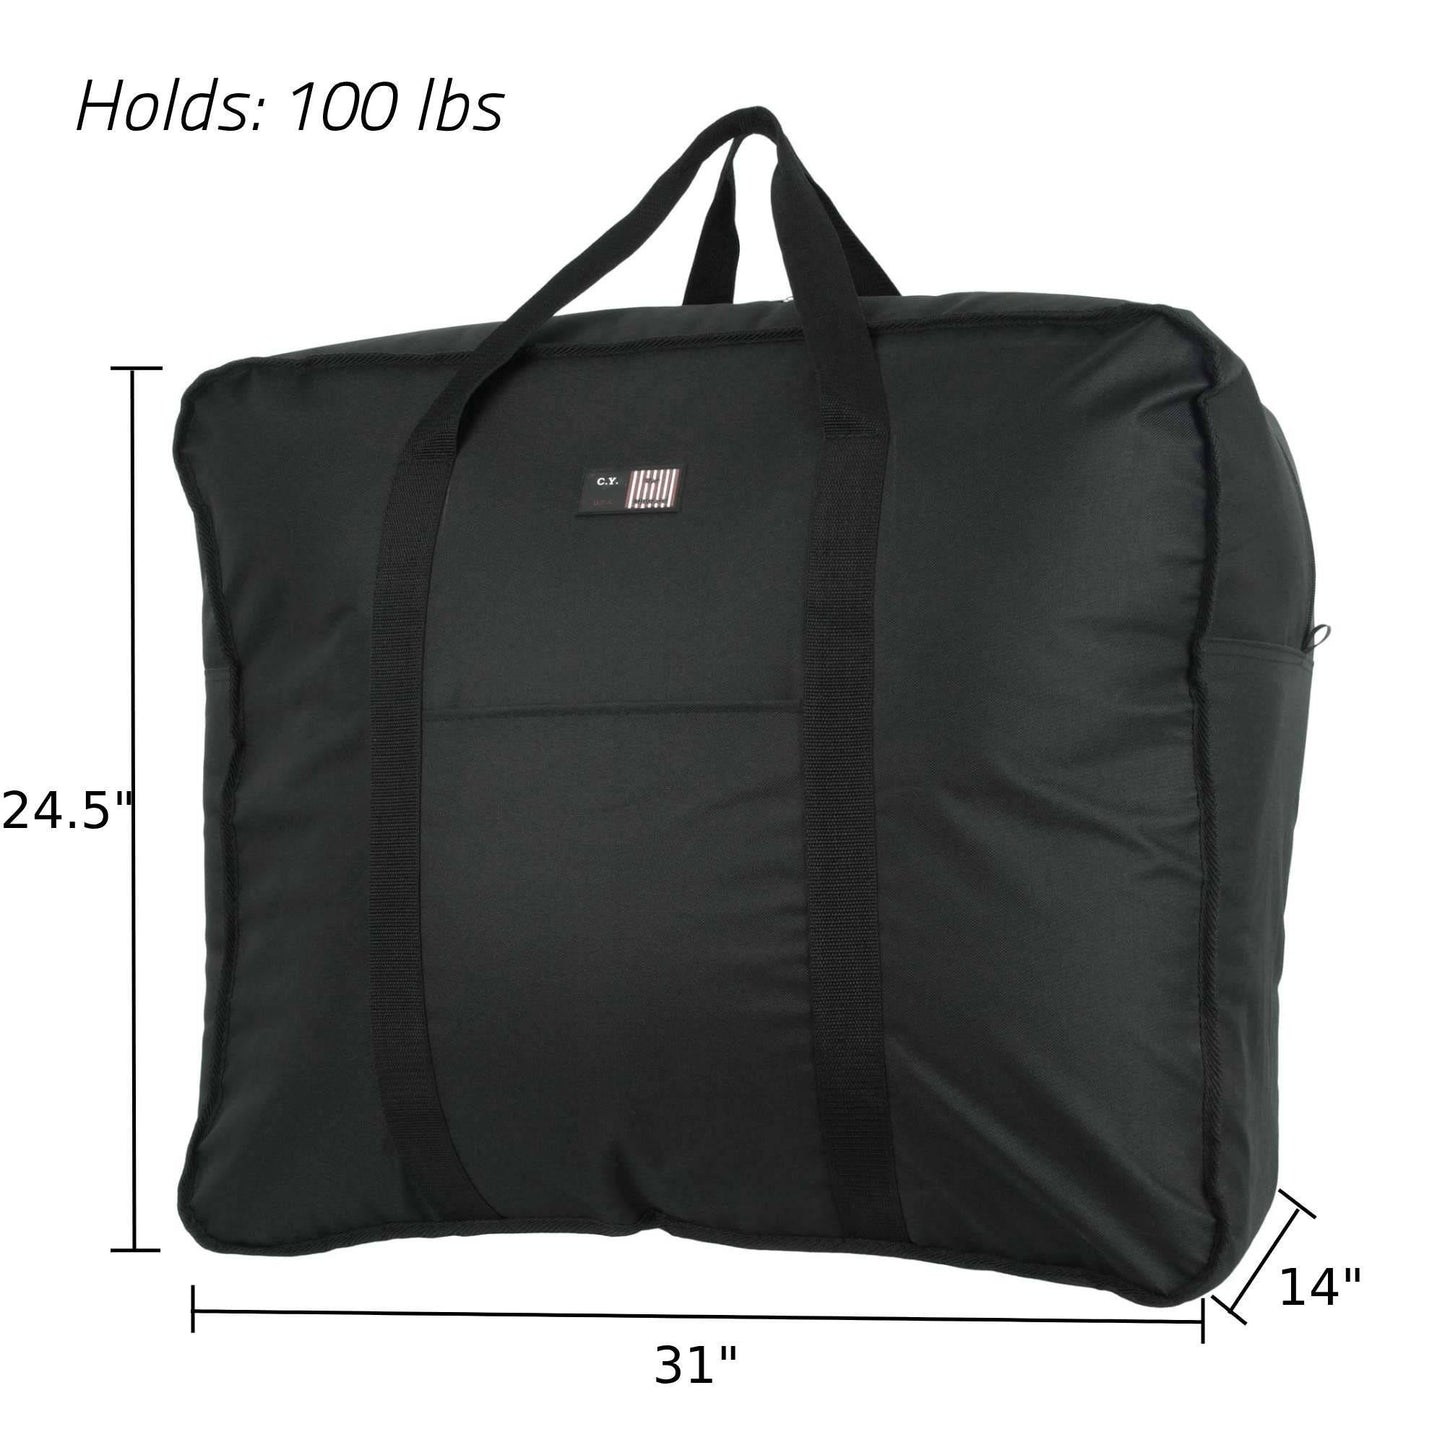 #12 - Square Duffel Bag (100lbs) (31")